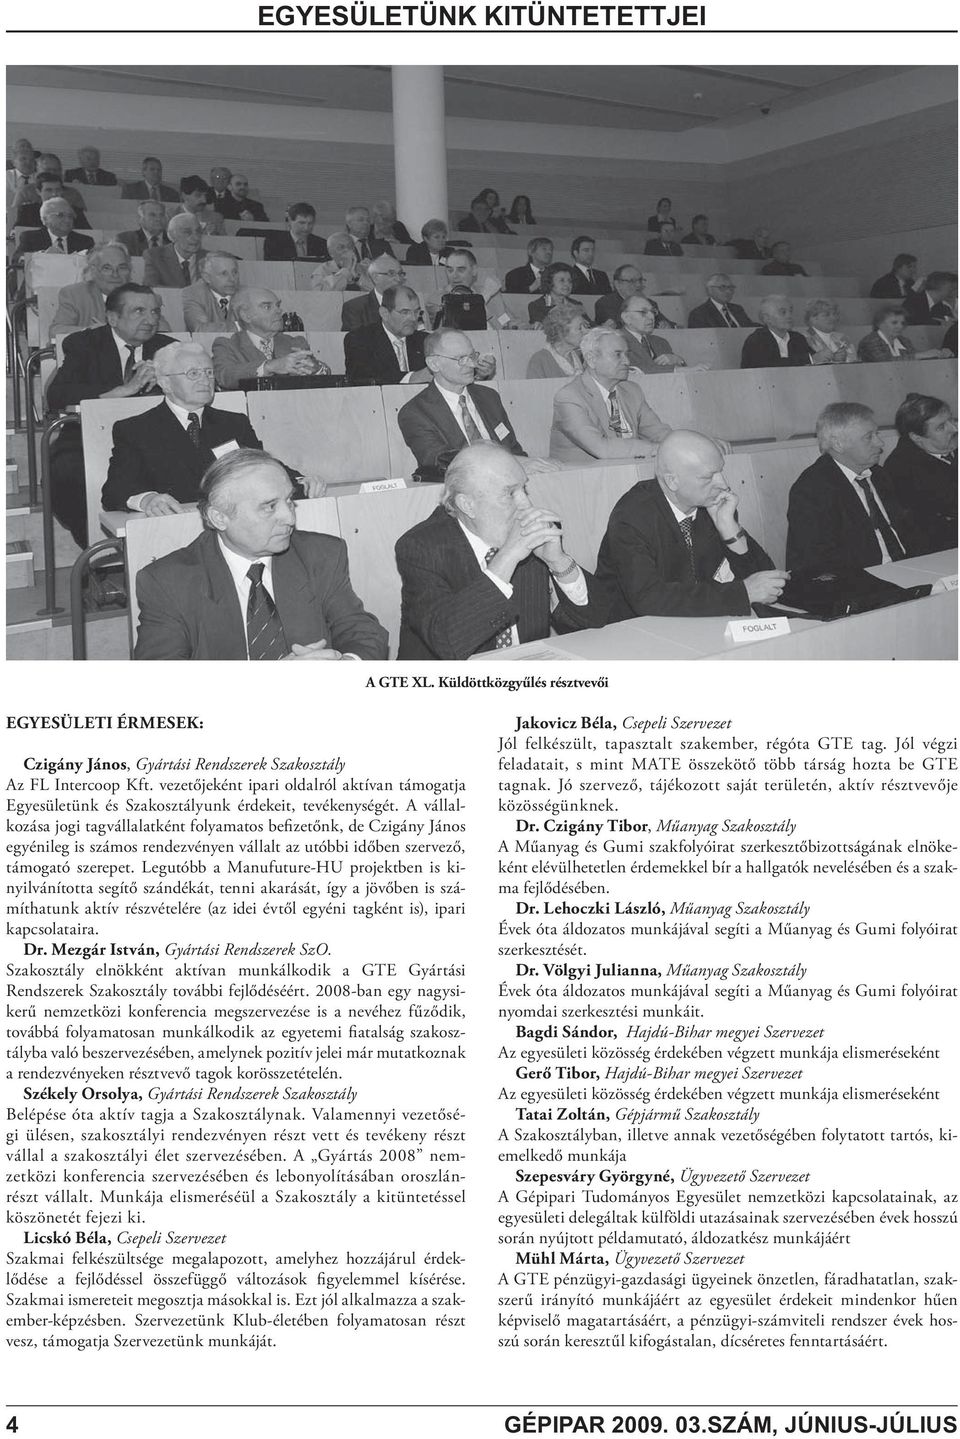 GÉPIPAR XL. ÉVFOLYAM SZÁM, JÚNIUS-JÚLIUS - PDF Free Download